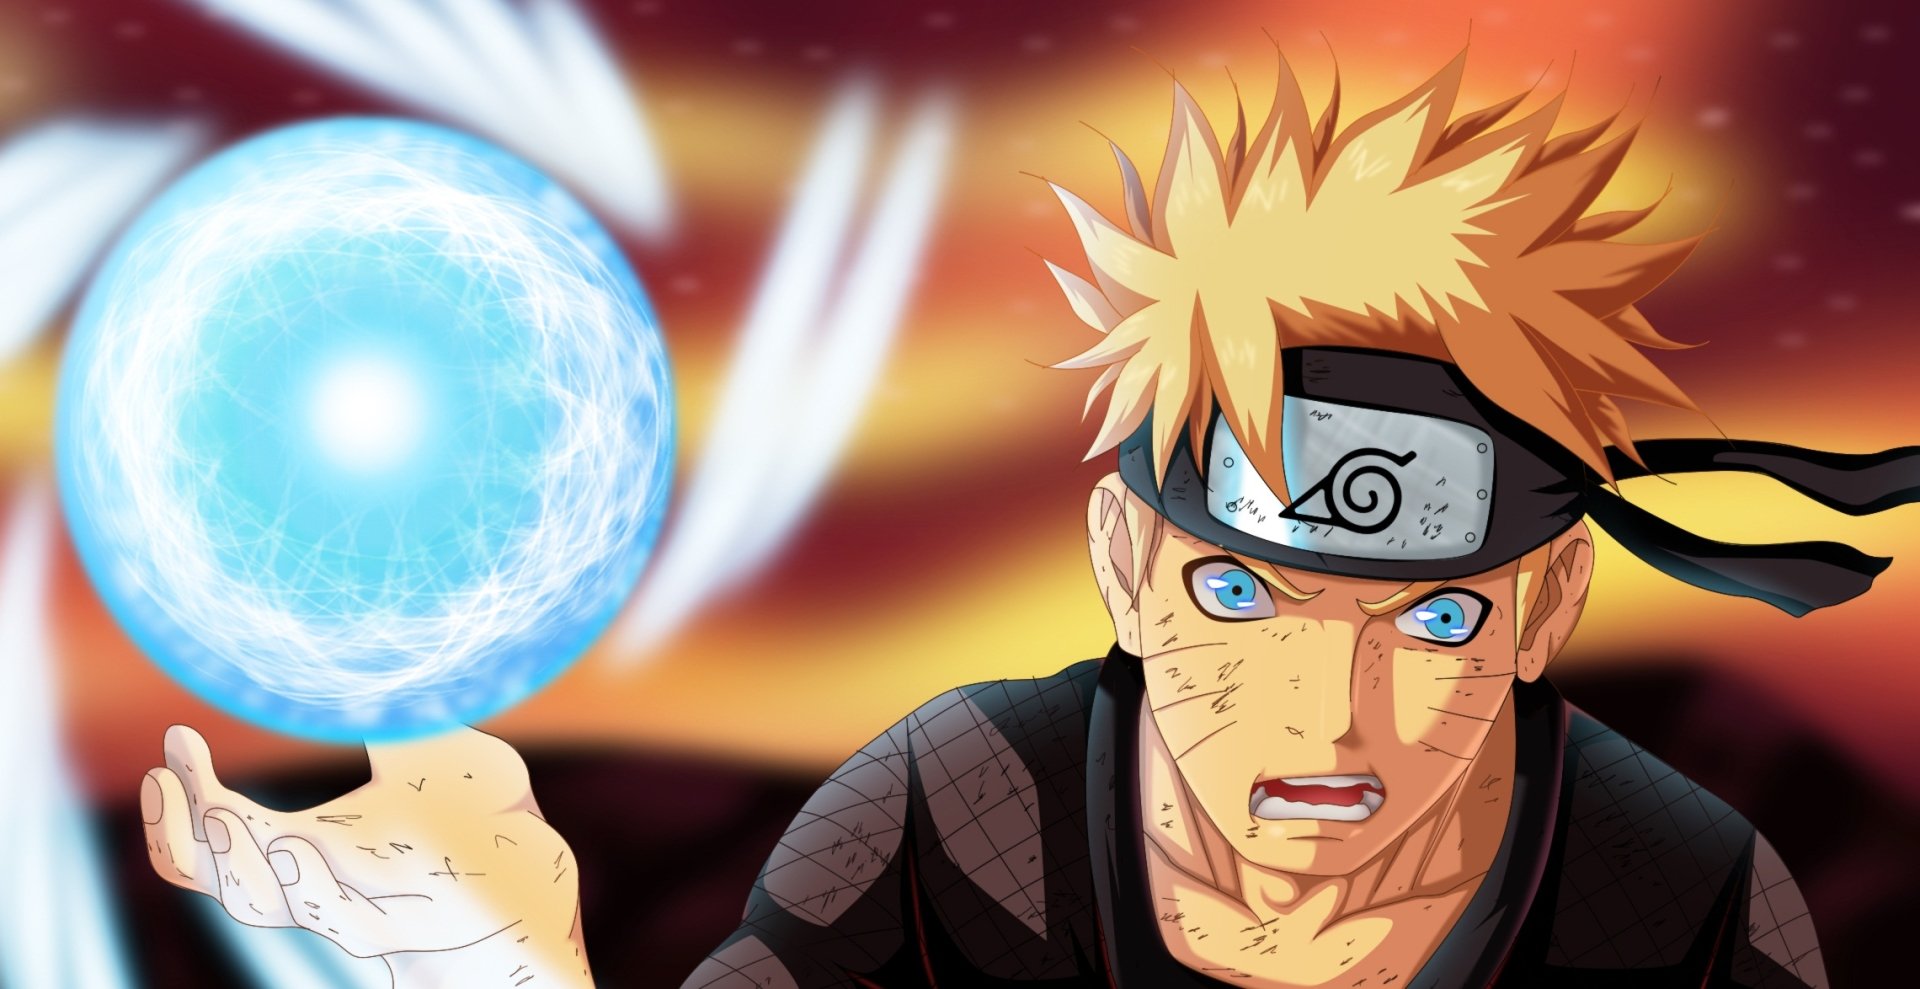  Naruto  HD Wallpaper Background Image 2280x1174 ID 